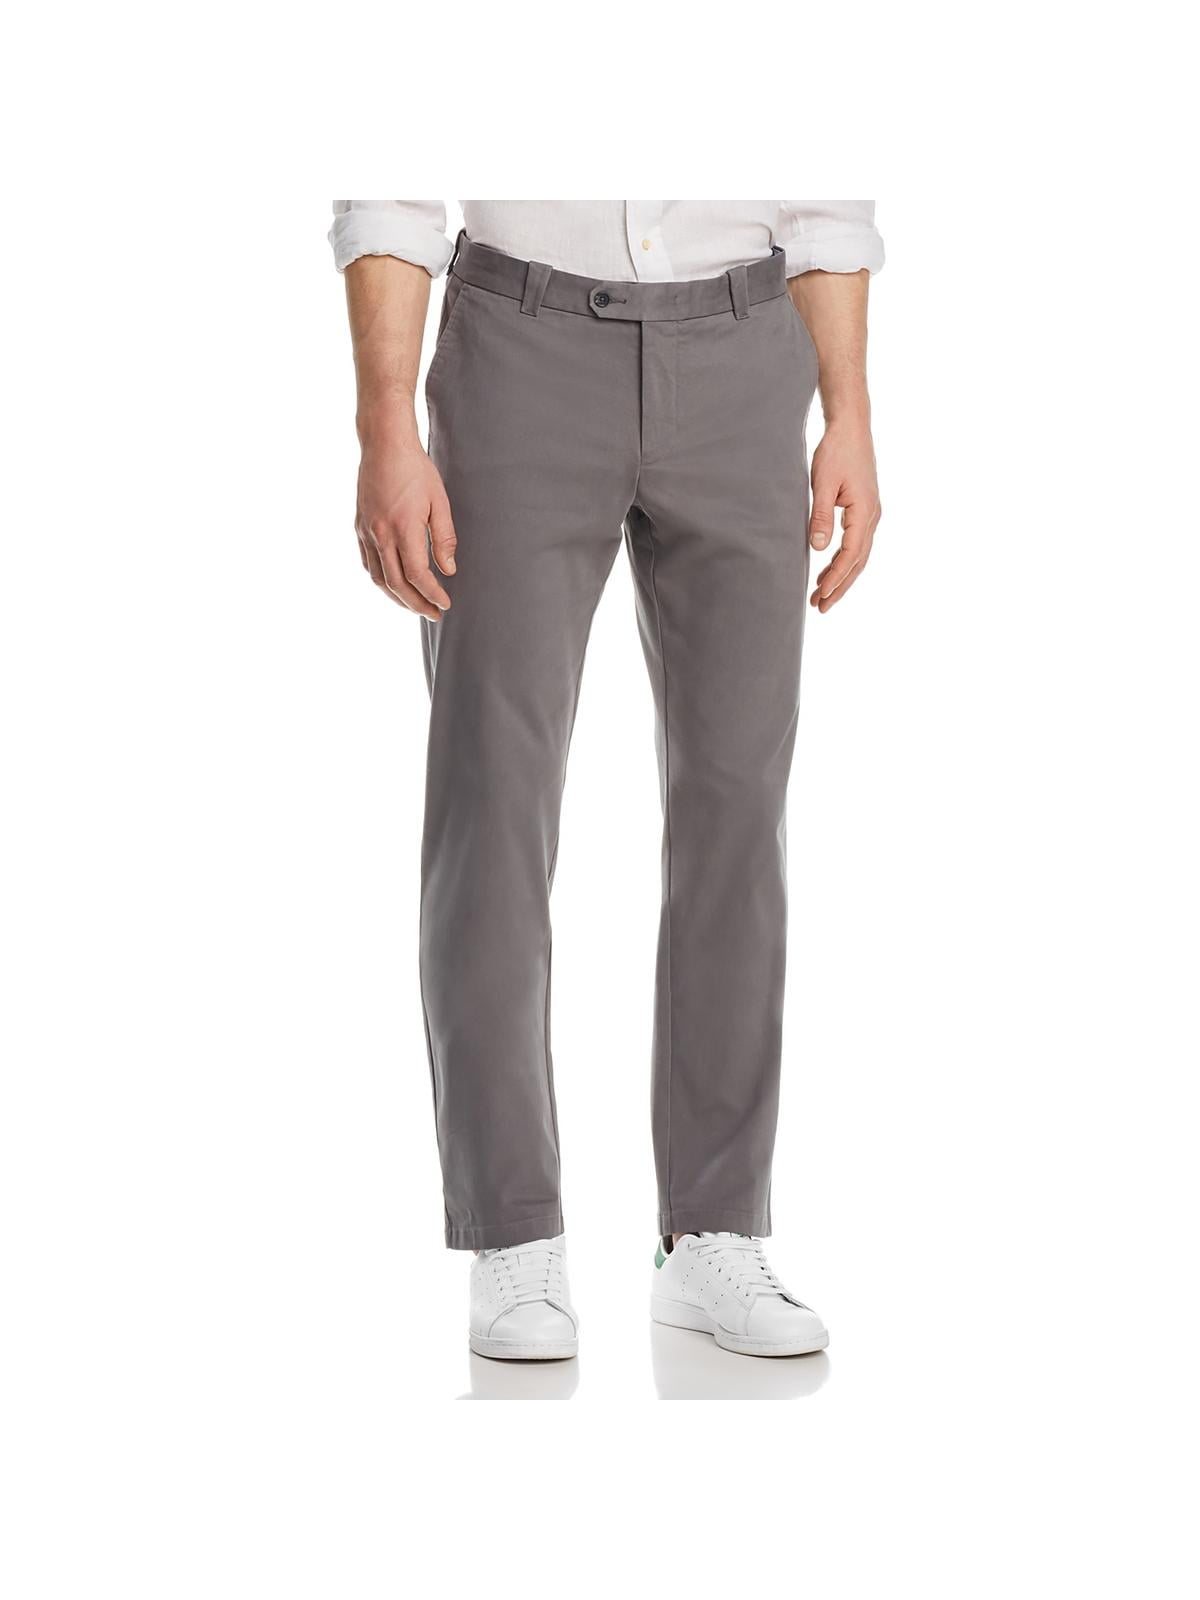 The Men's Store Mens Classic Fit Chino Khaki Pants Gray 34/34 - Walmart.com